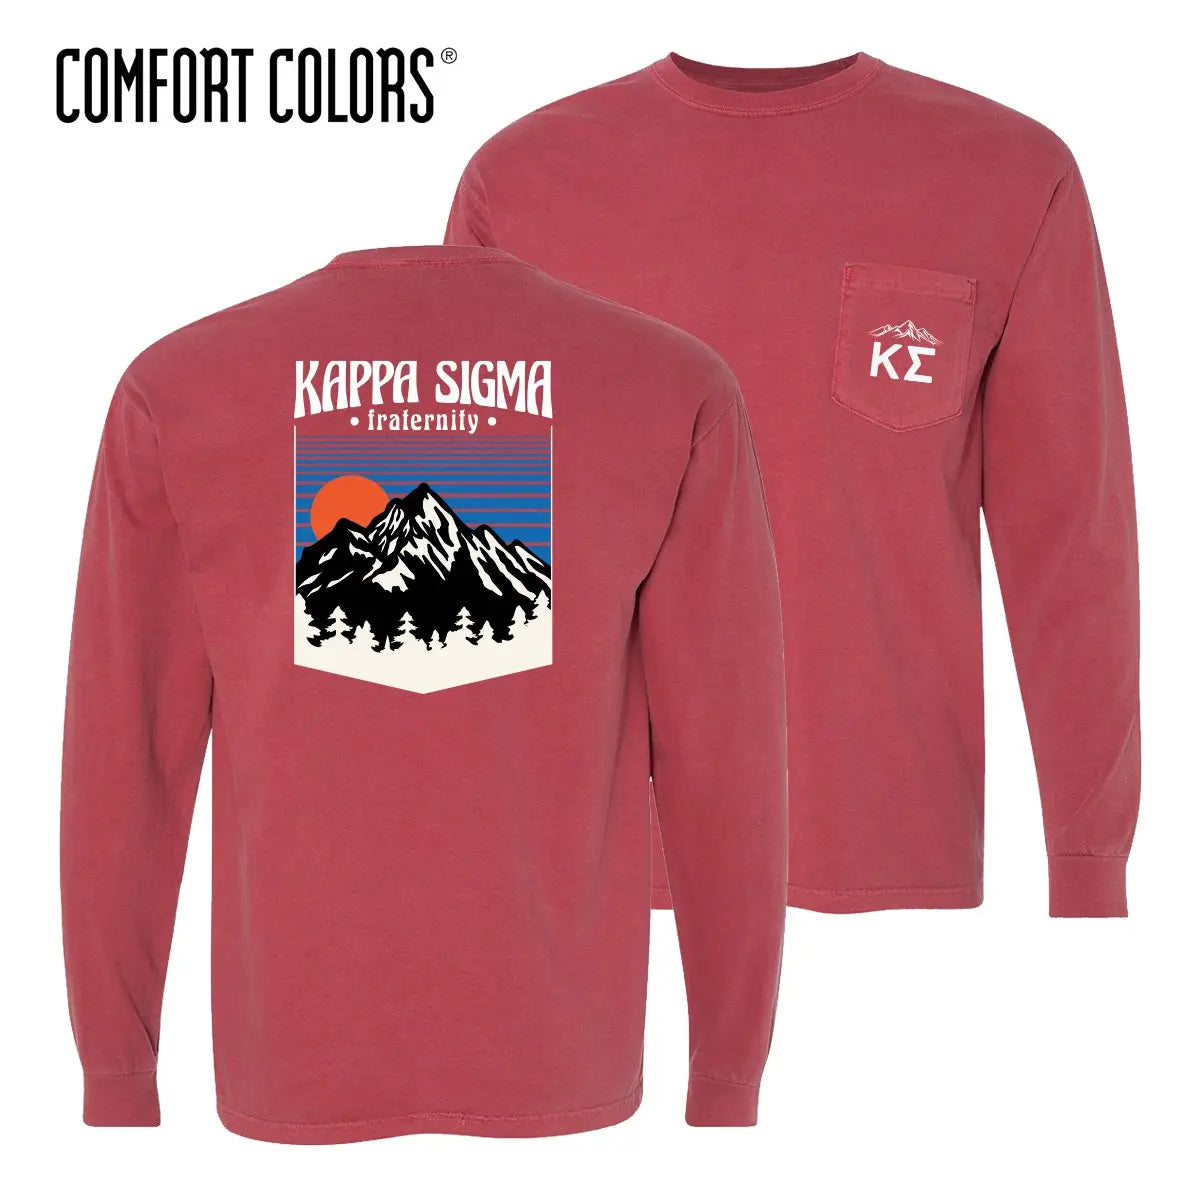 Kappa Sig Comfort Colors Long Sleeve Retro Alpine Tee - Kappa Sigma Official Store